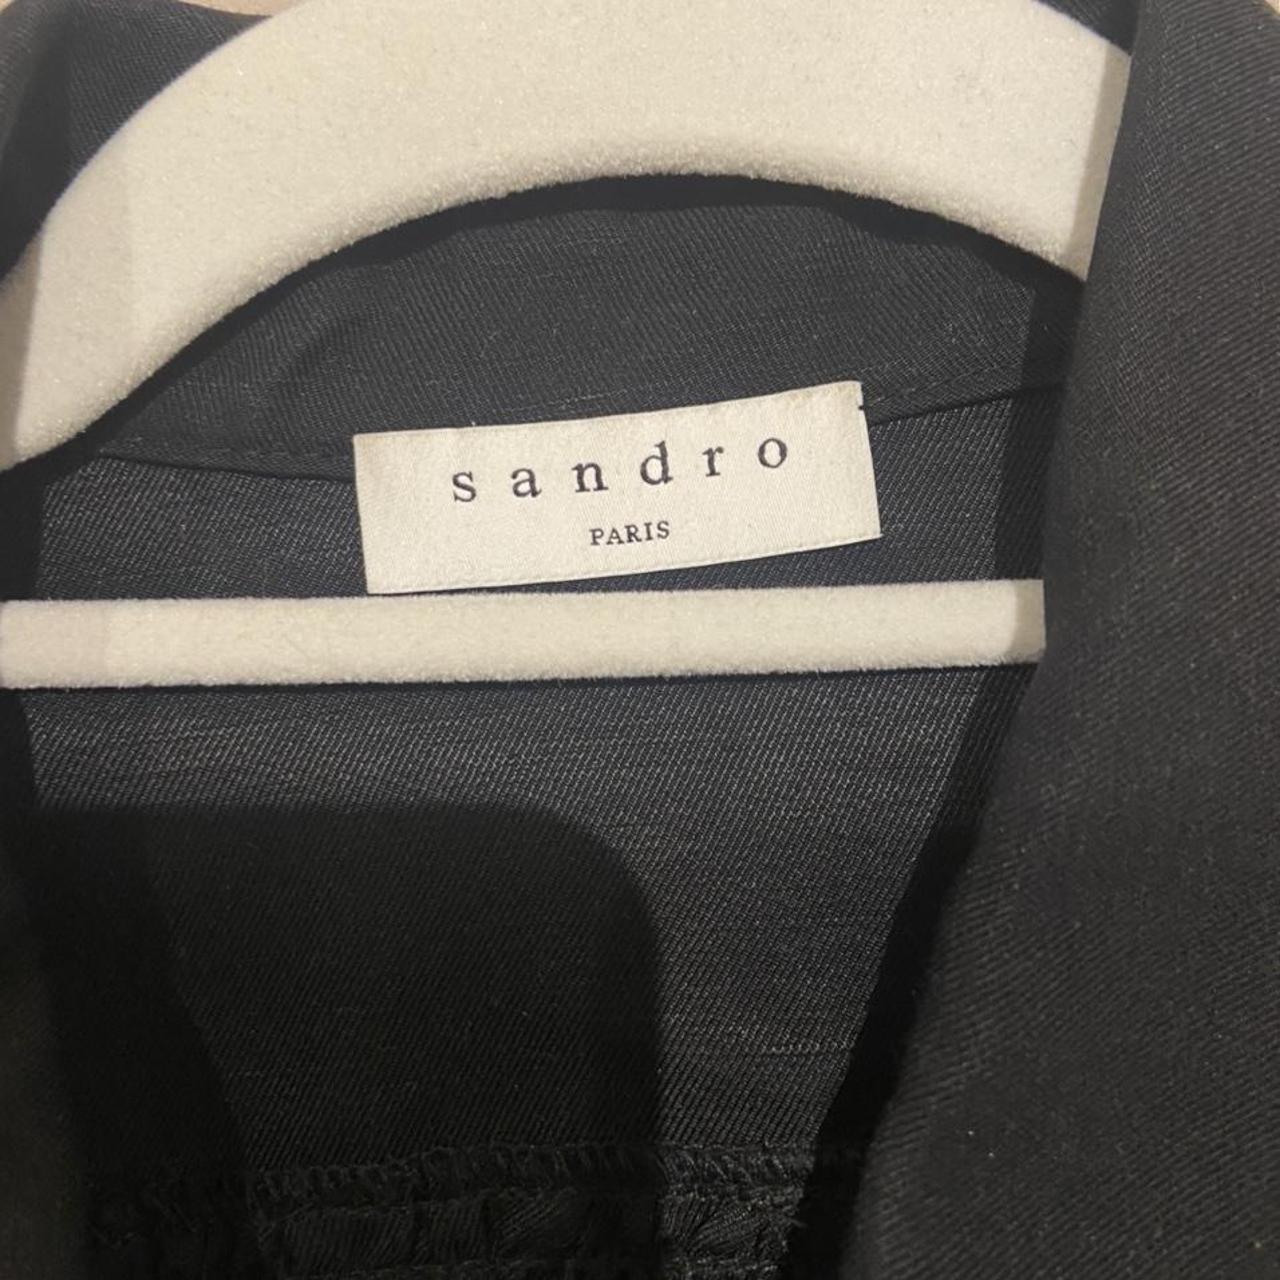 Sandro Women's Black and Gold Dress | Depop